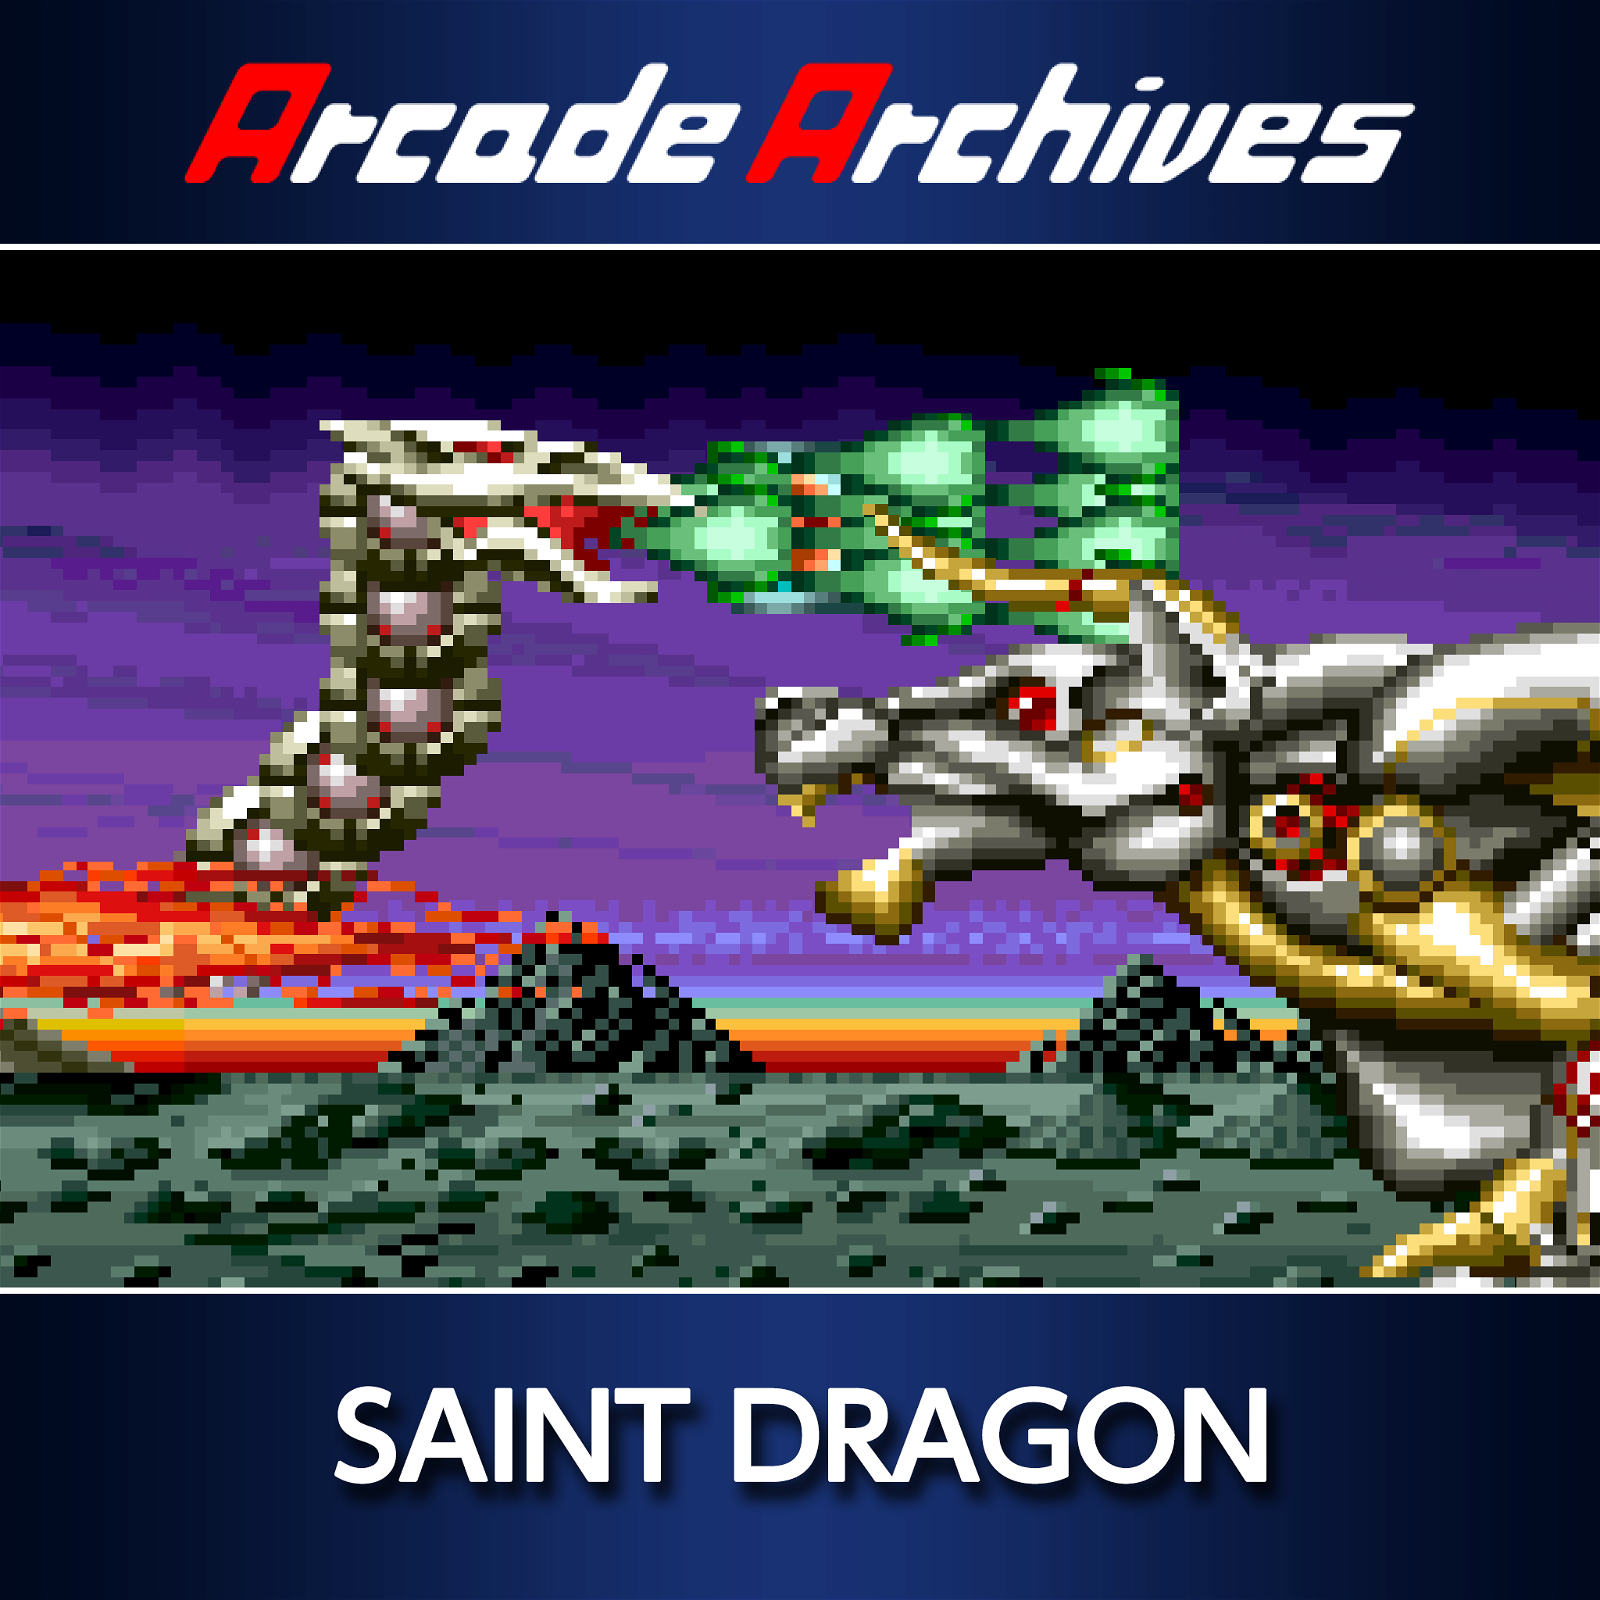 Image of Arcade Archives SAINT DRAGON